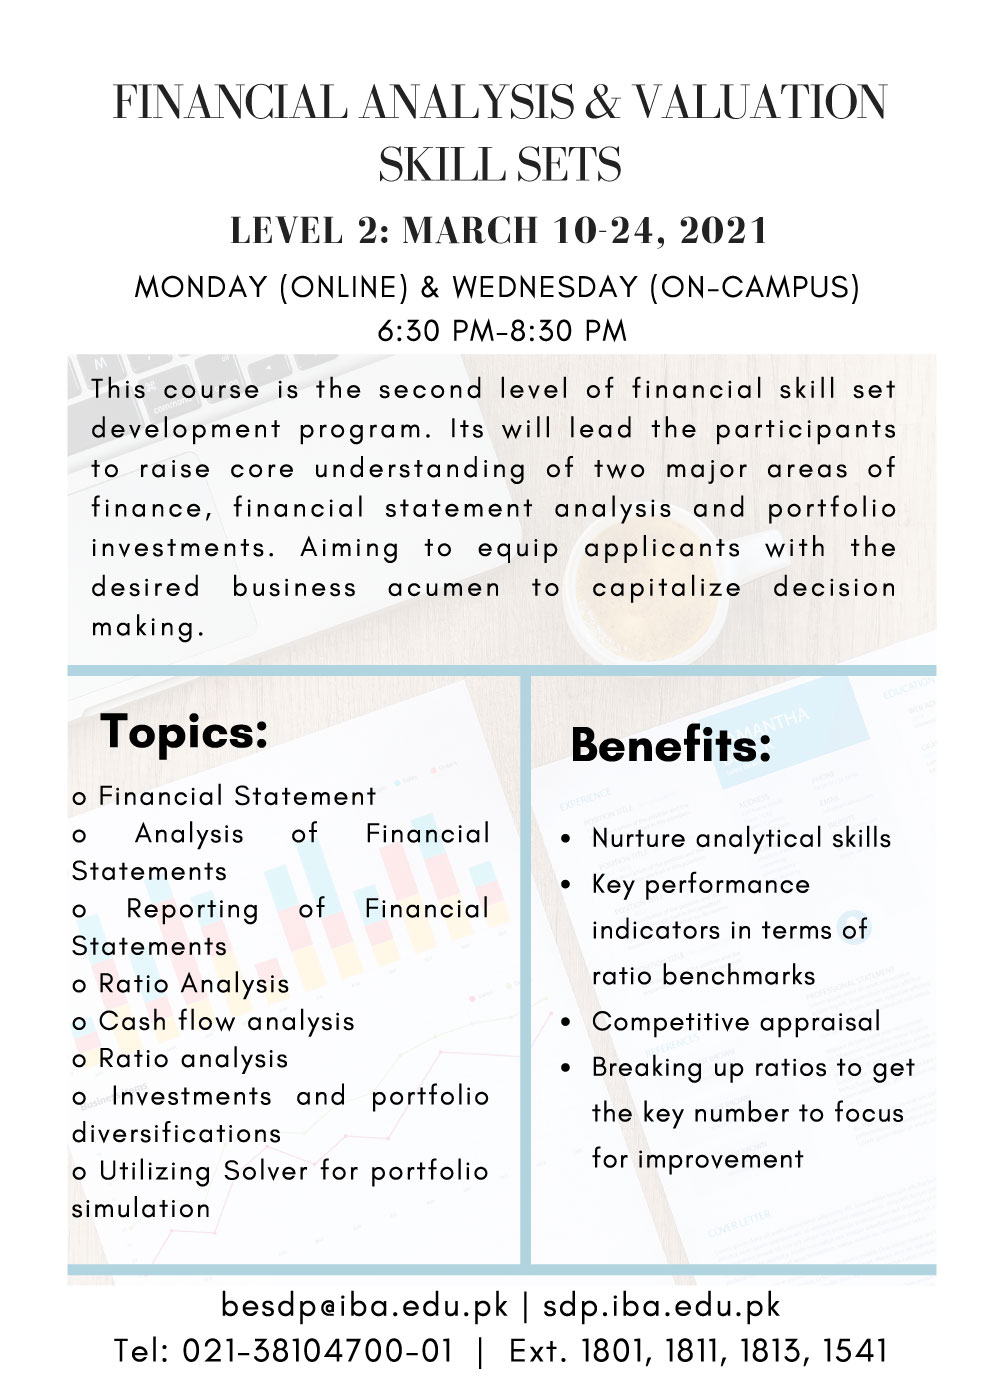 Financial Analysis & Valuation Skill Sets